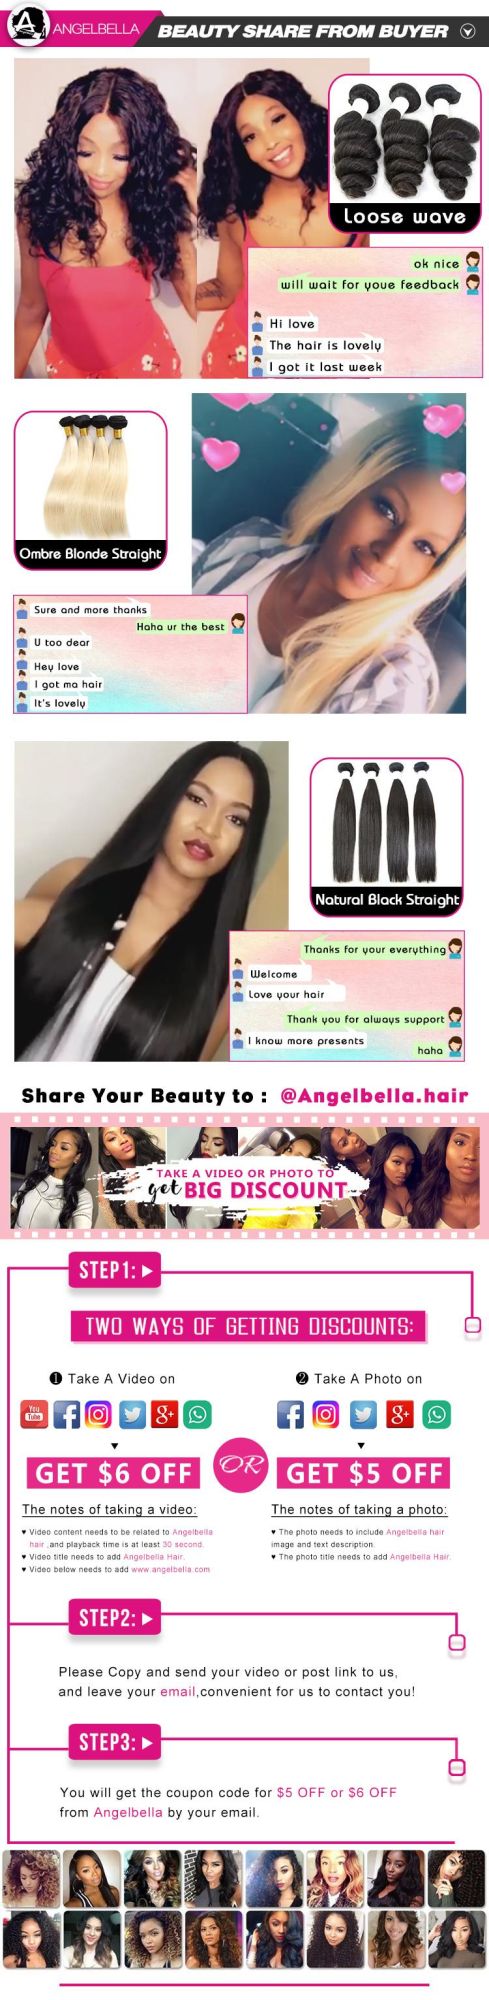 Angelbella New Styles Braiding Hair Weft Pixie Curl Natural Color Virgin Remy Hair Bundles